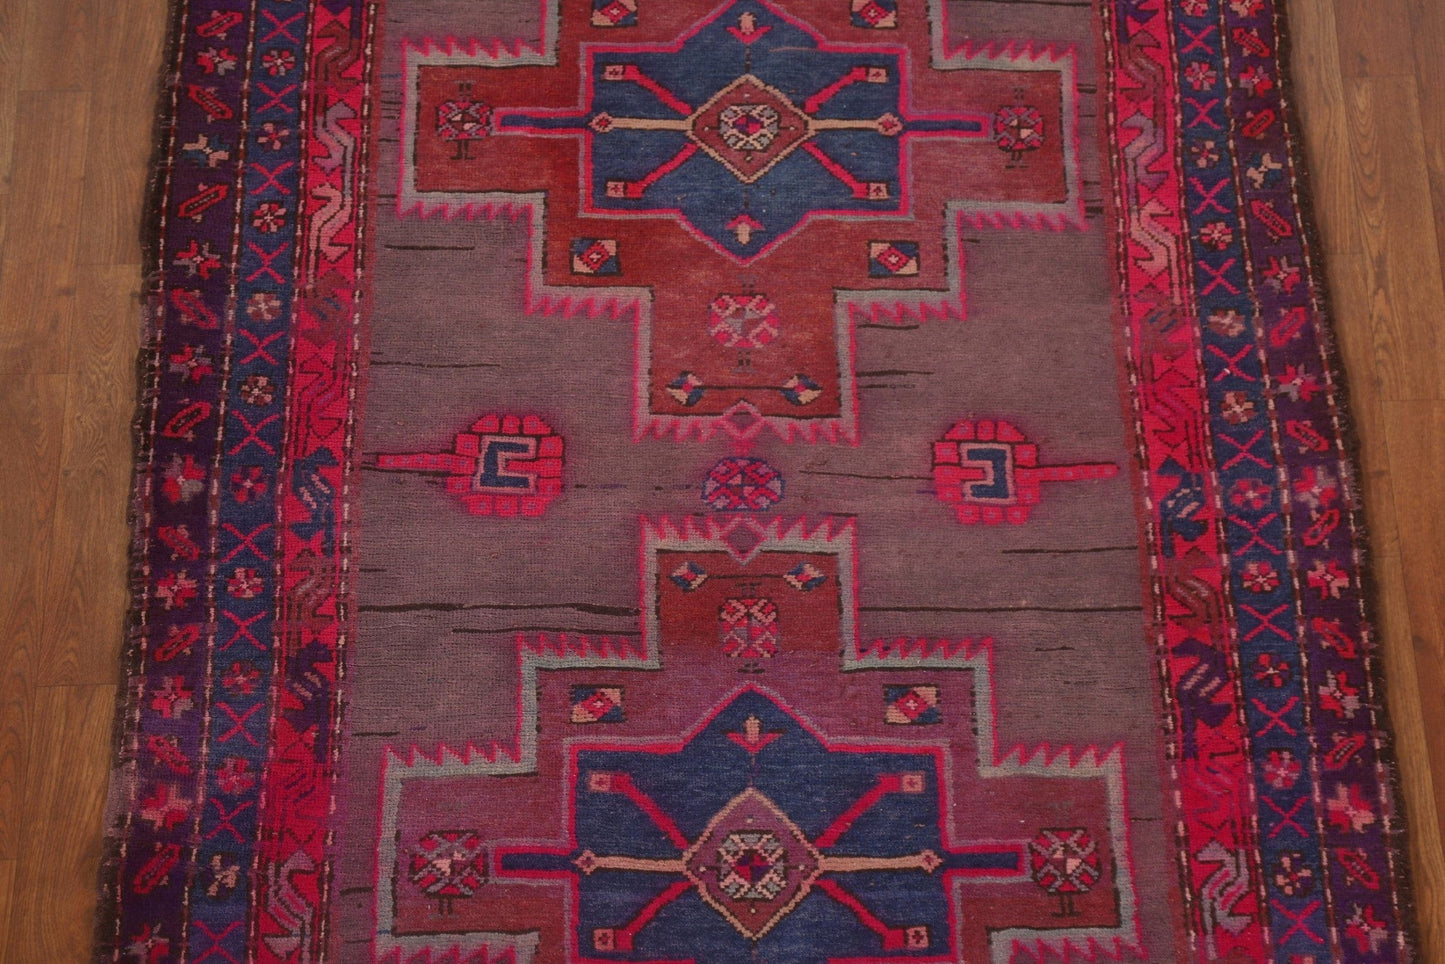 Handmade Wool Ardebil Persian Runner Rug 4x13